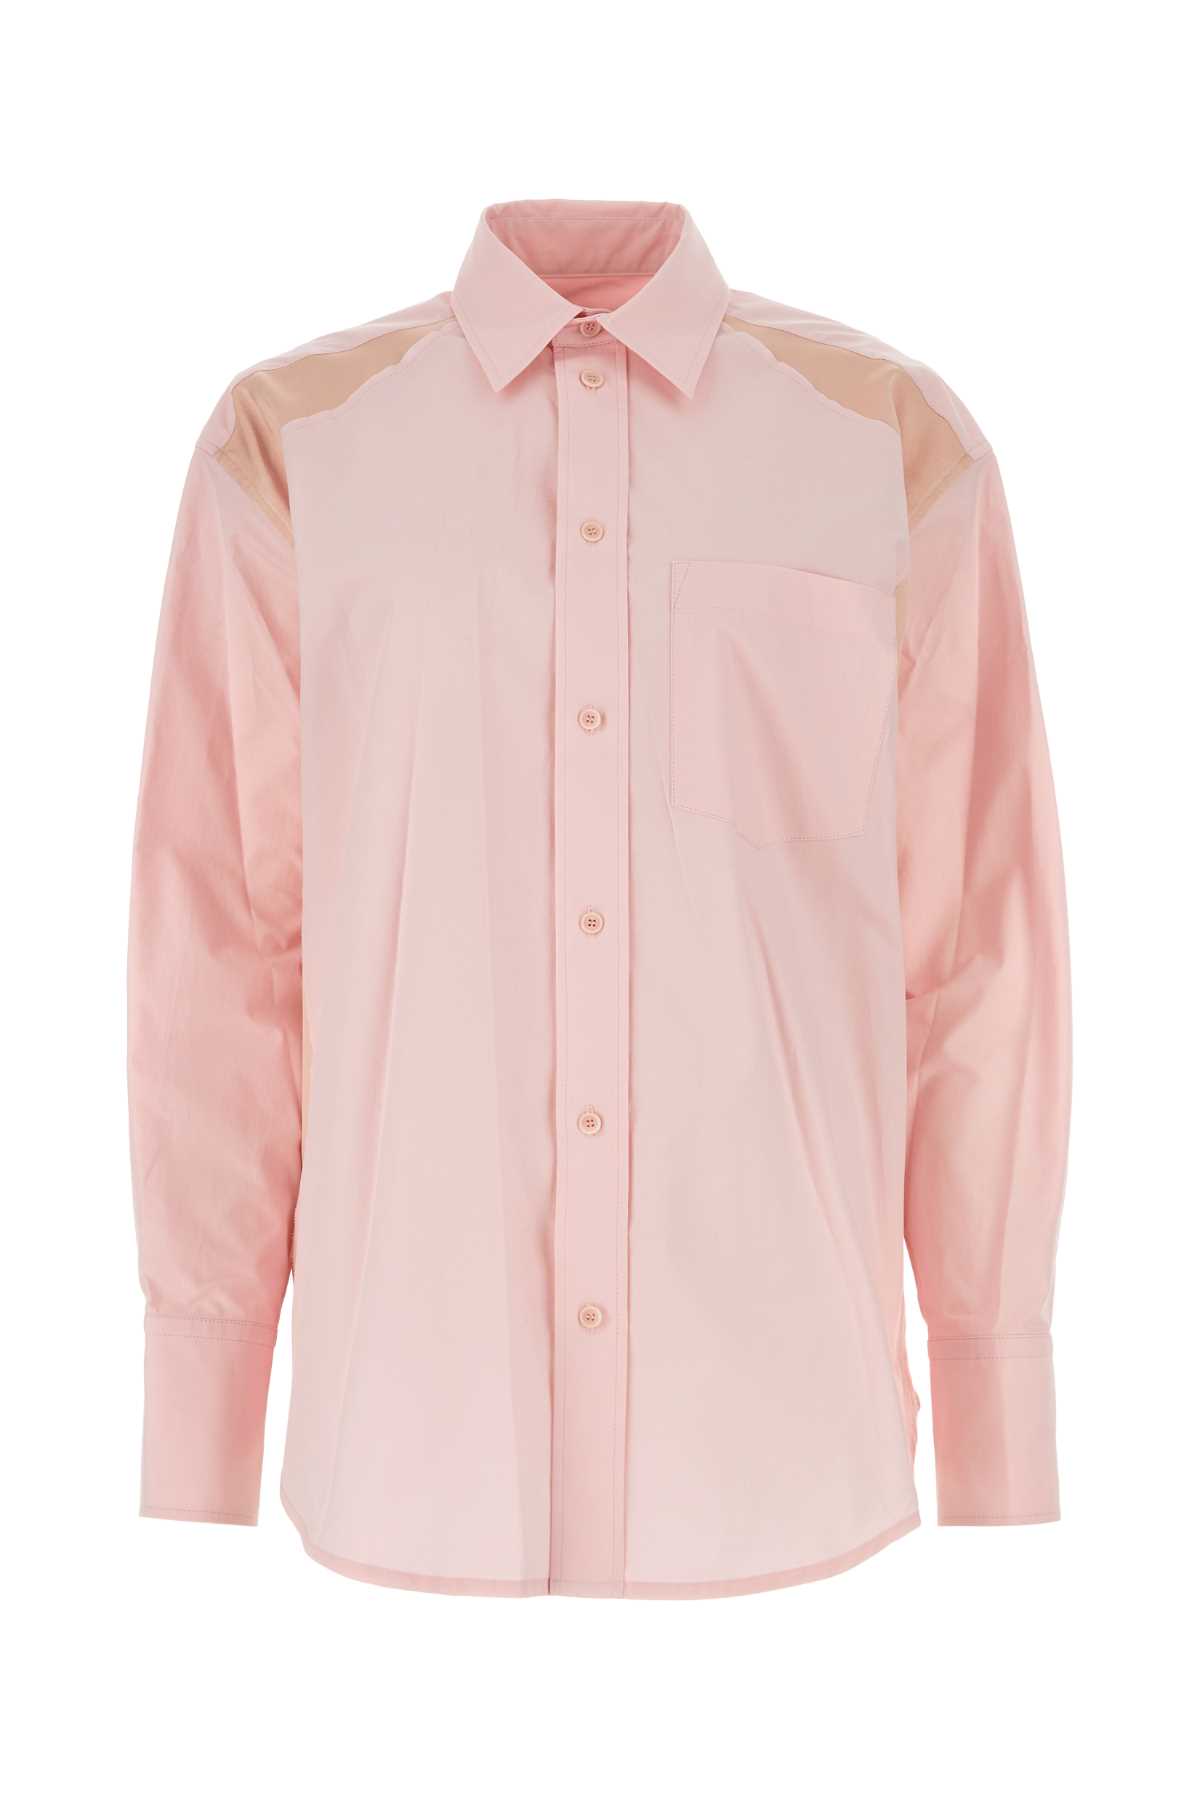 J.W. Anderson Pink Poplin Shirt